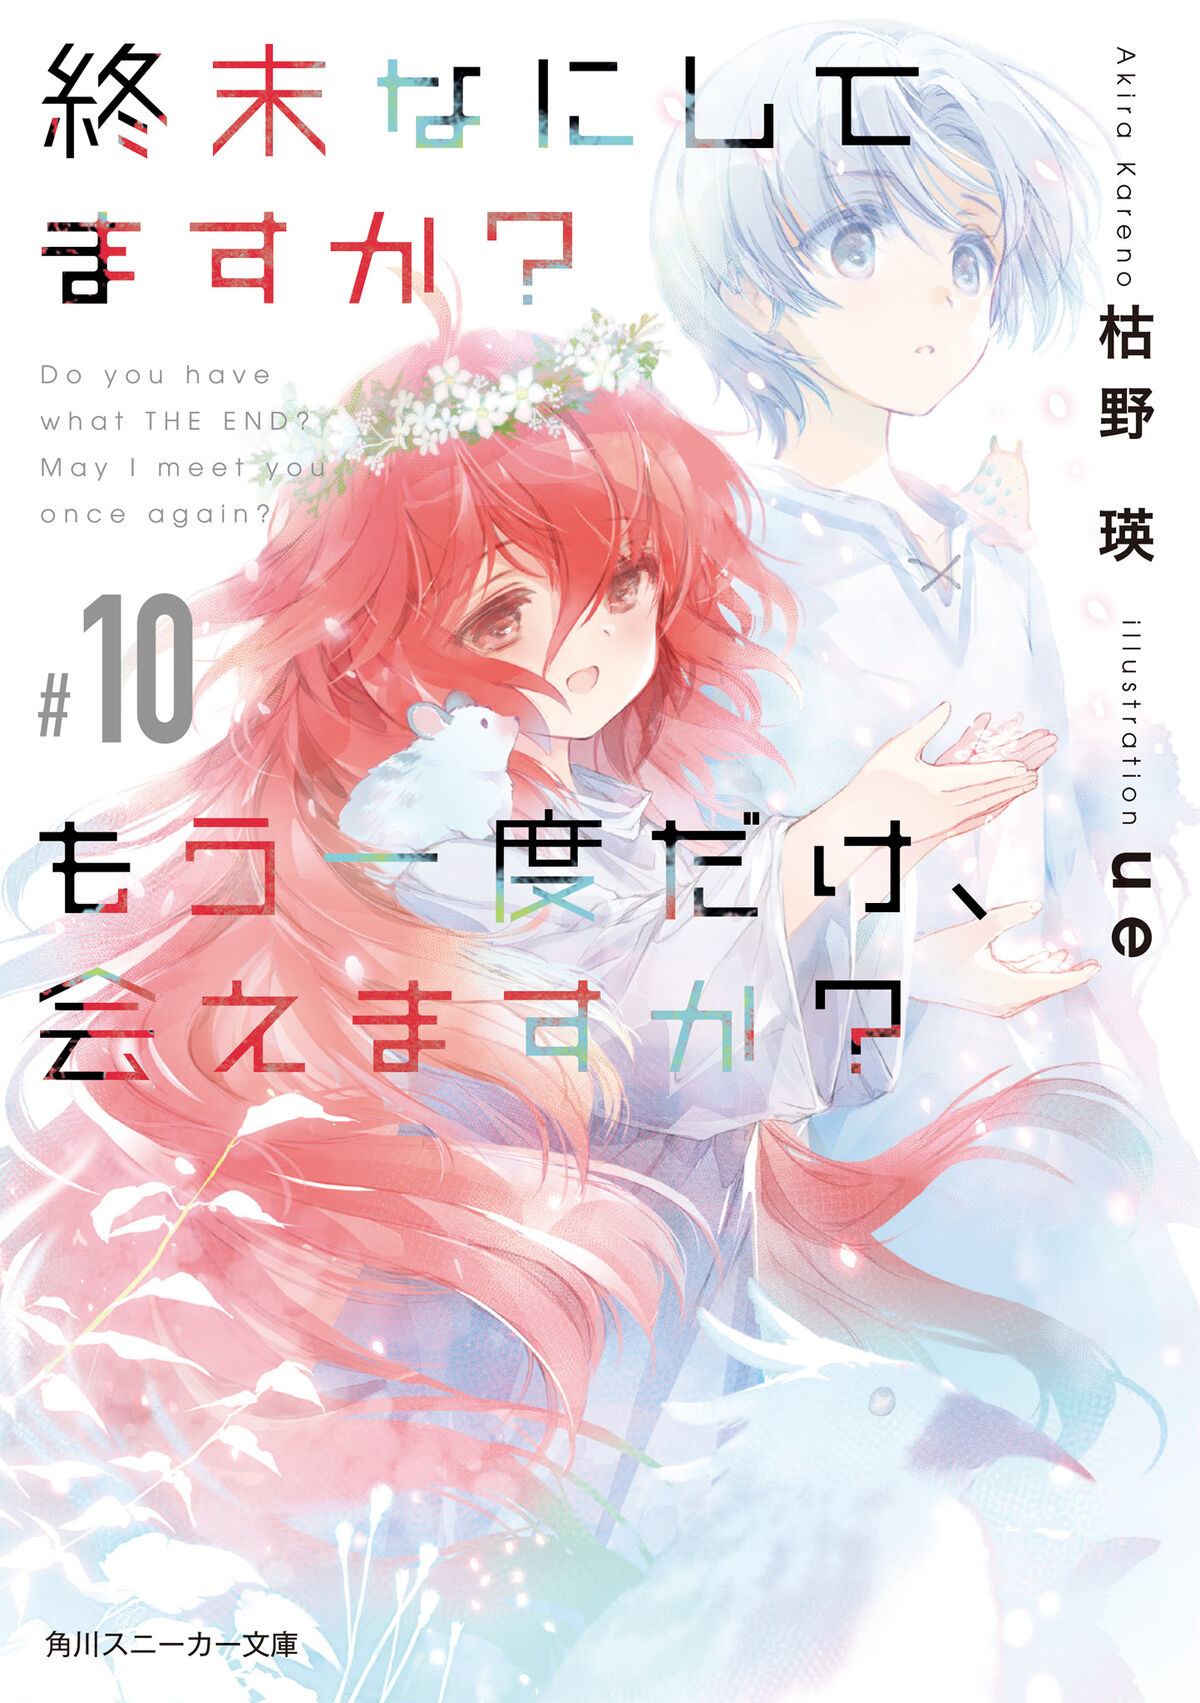 Shūmatsu no Harem #10 - Vol. 10 (Issue)